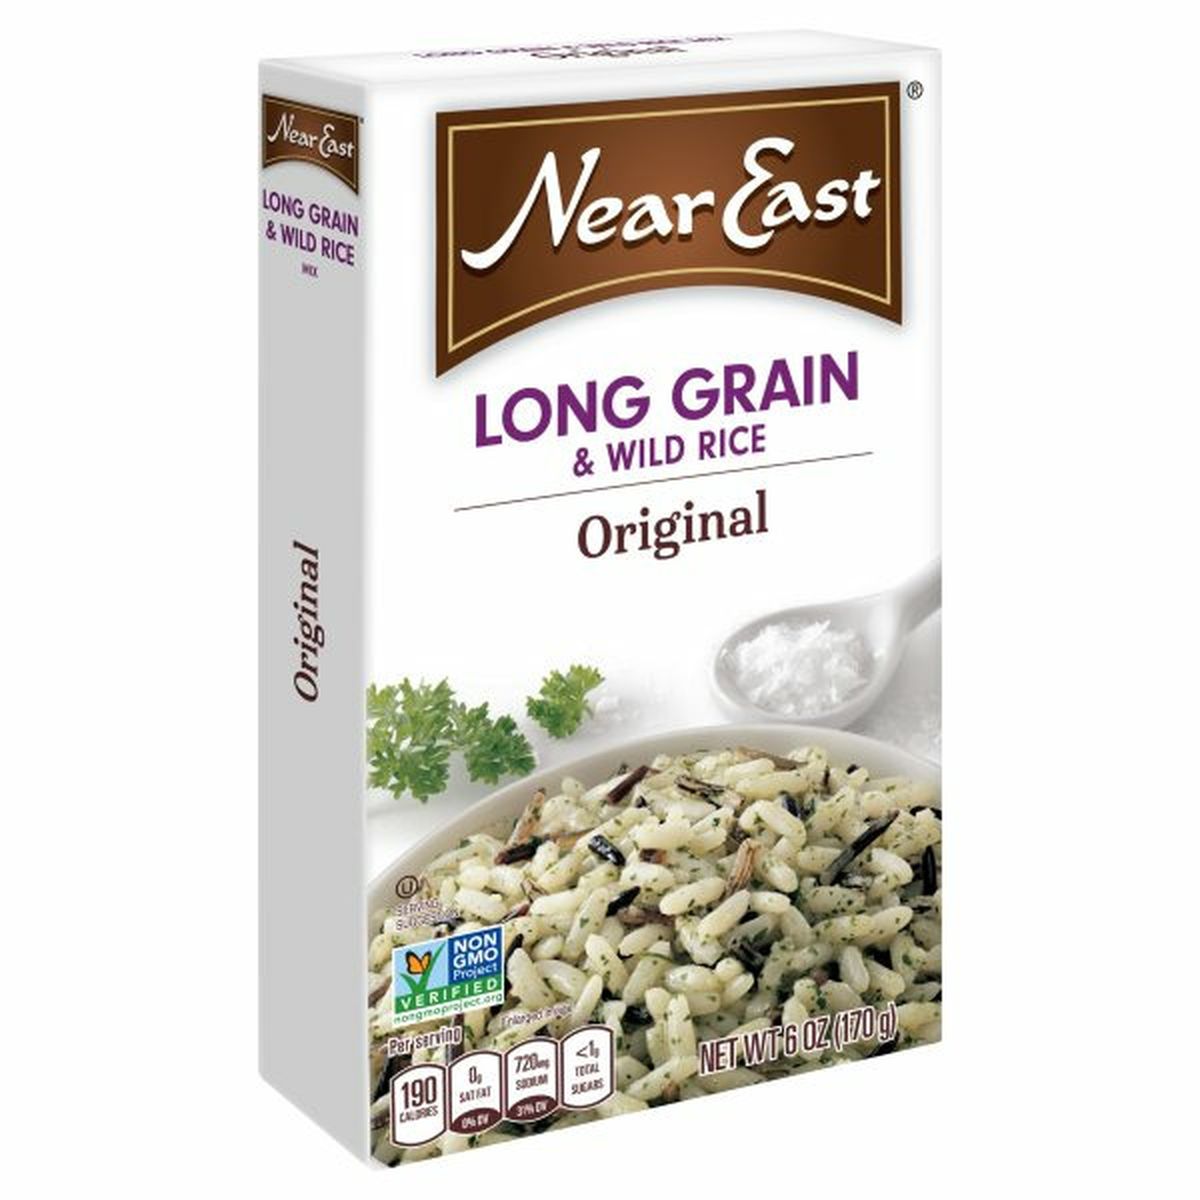 Calories in Near East Long Grain & Wild Rice Mix, Original